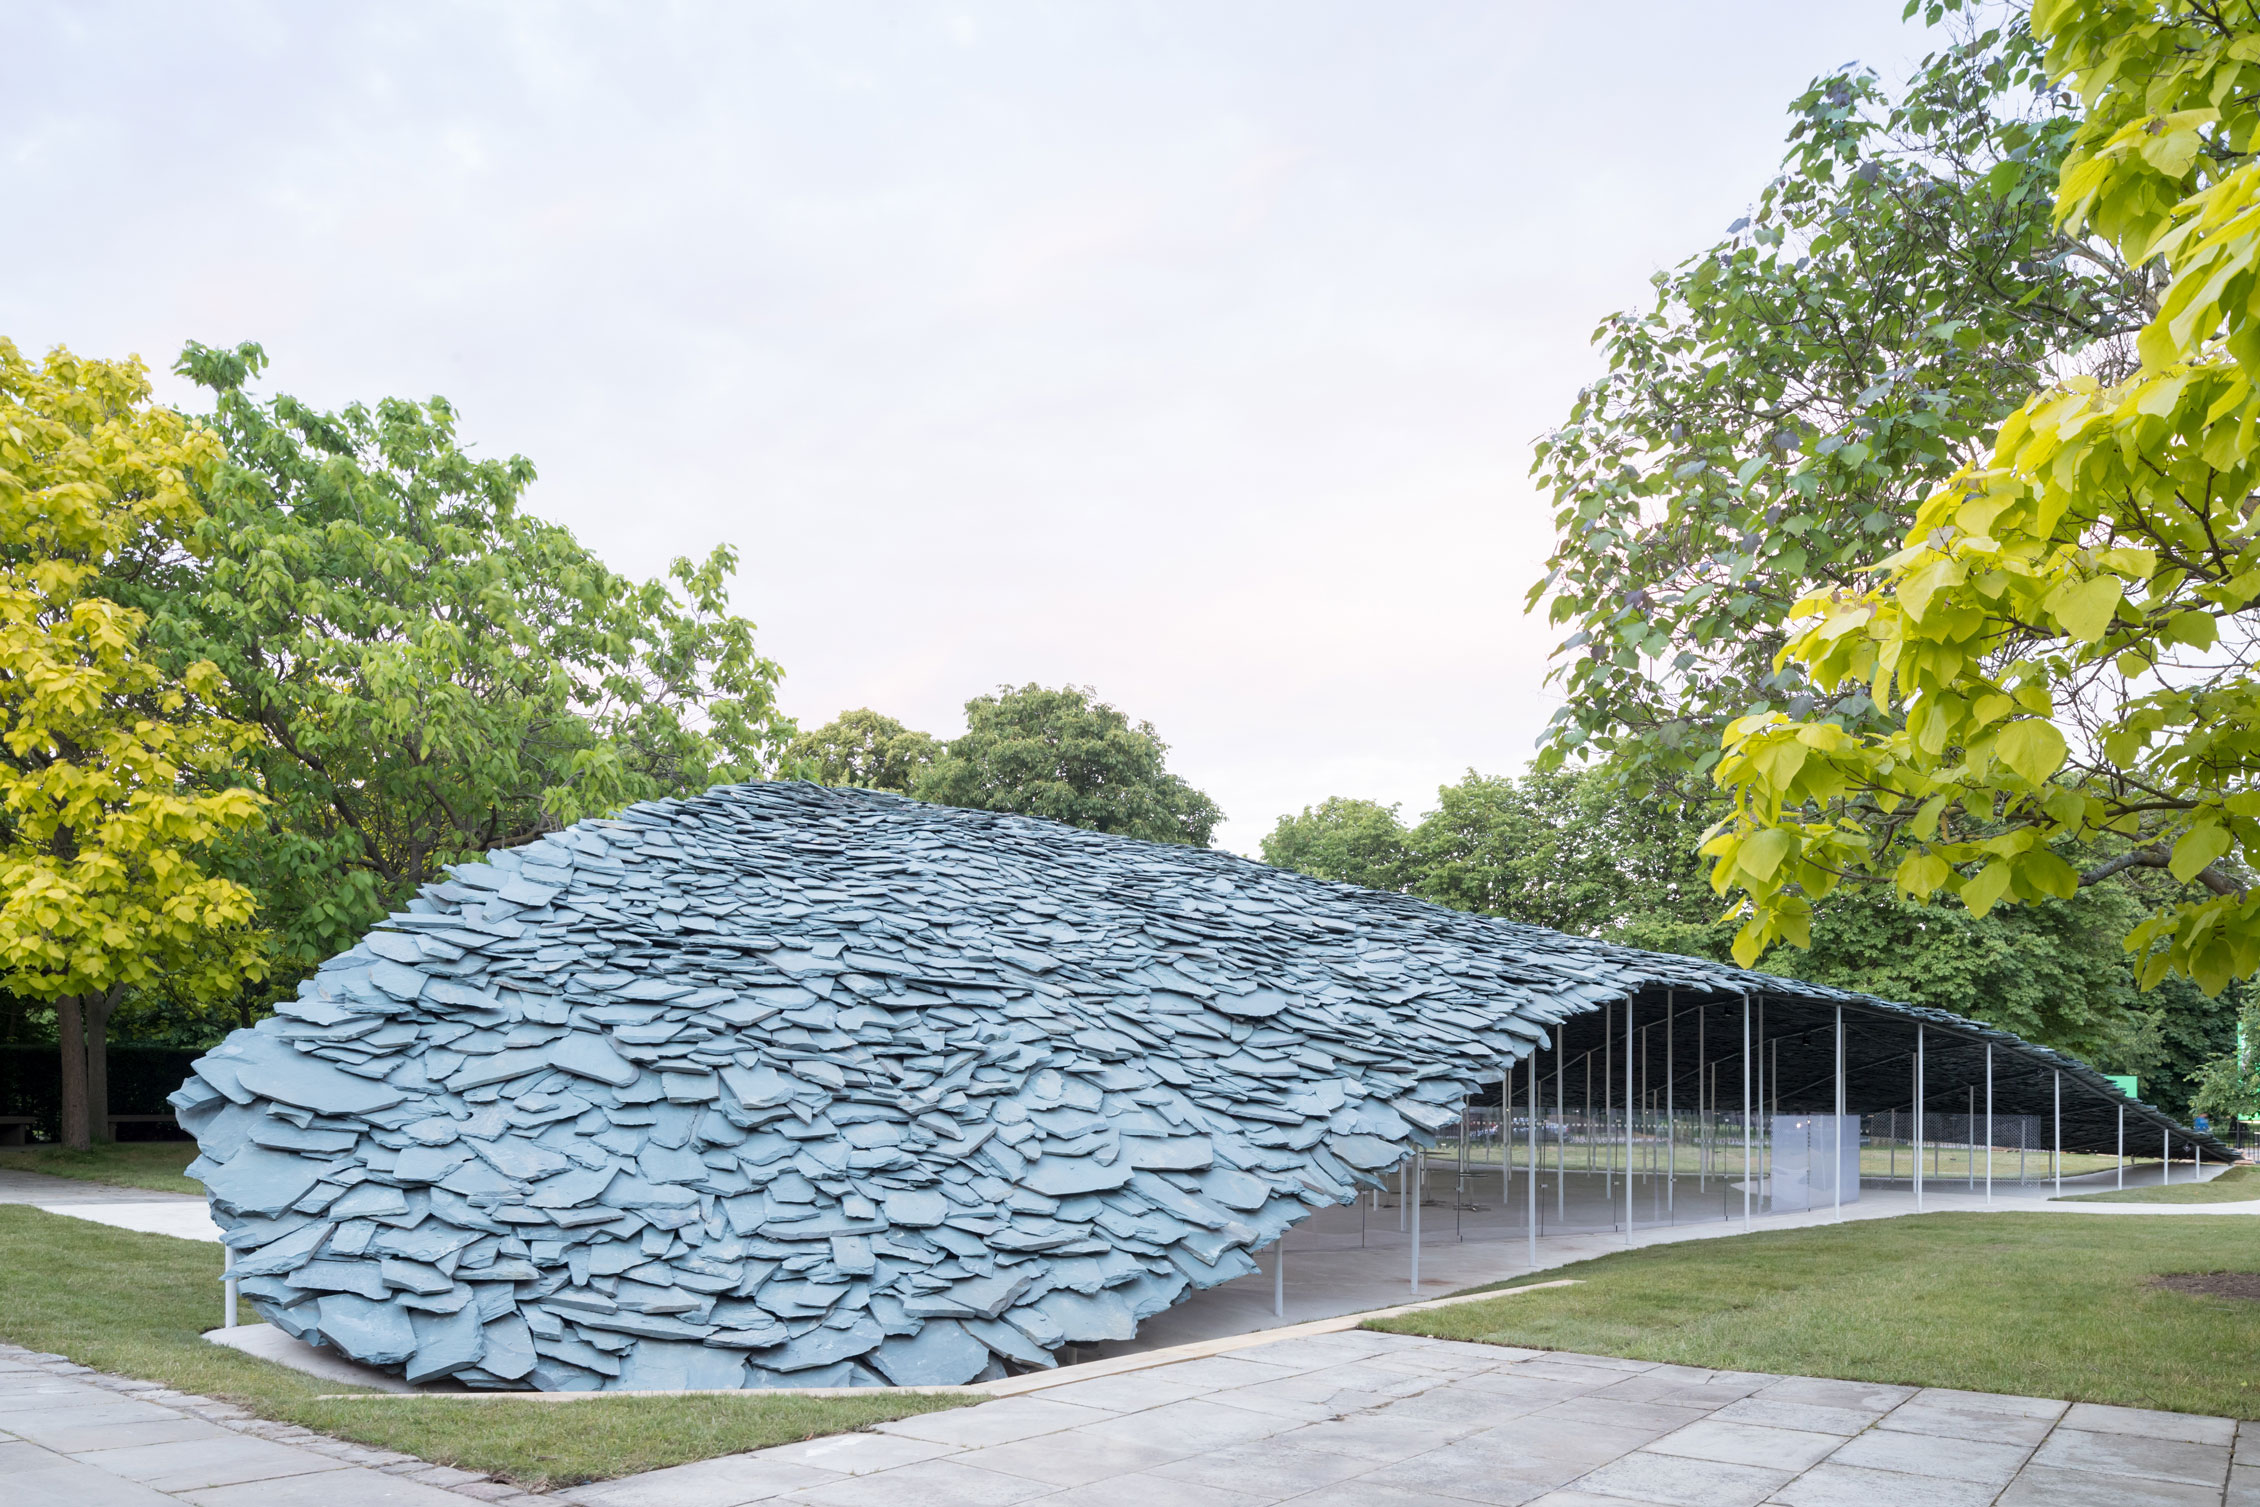 Junya Ishigami's Serpentine Pavilion 2019. Serpentine Gallery, London © Junya Ishigami + Associates, Photography © 2019 Iwan Baan